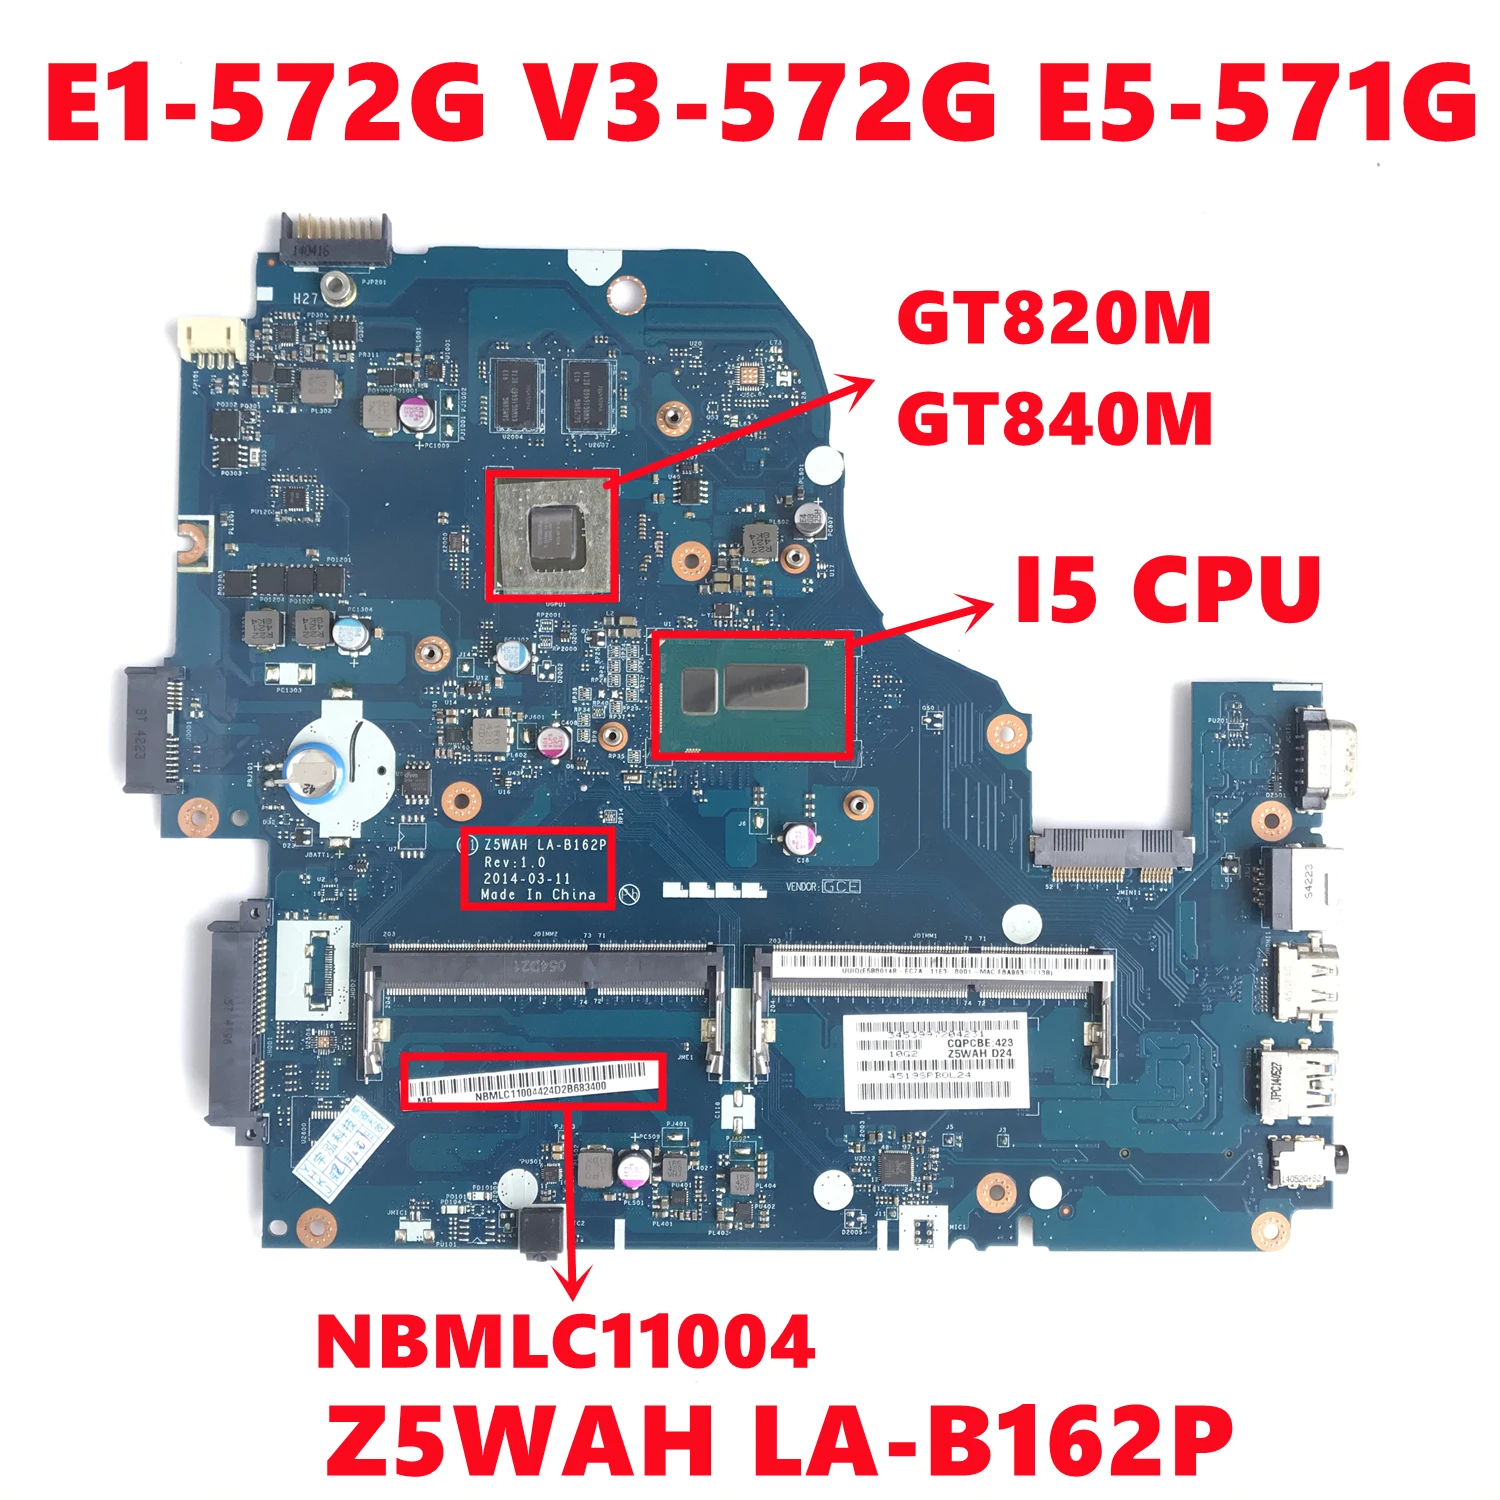   NBMLC11004  Acer ASPIRE E1-572G V3-572G E5-571G,     Z5WAH LA-B162P W/ I5 CPU GT820M/GT840M 100% Test